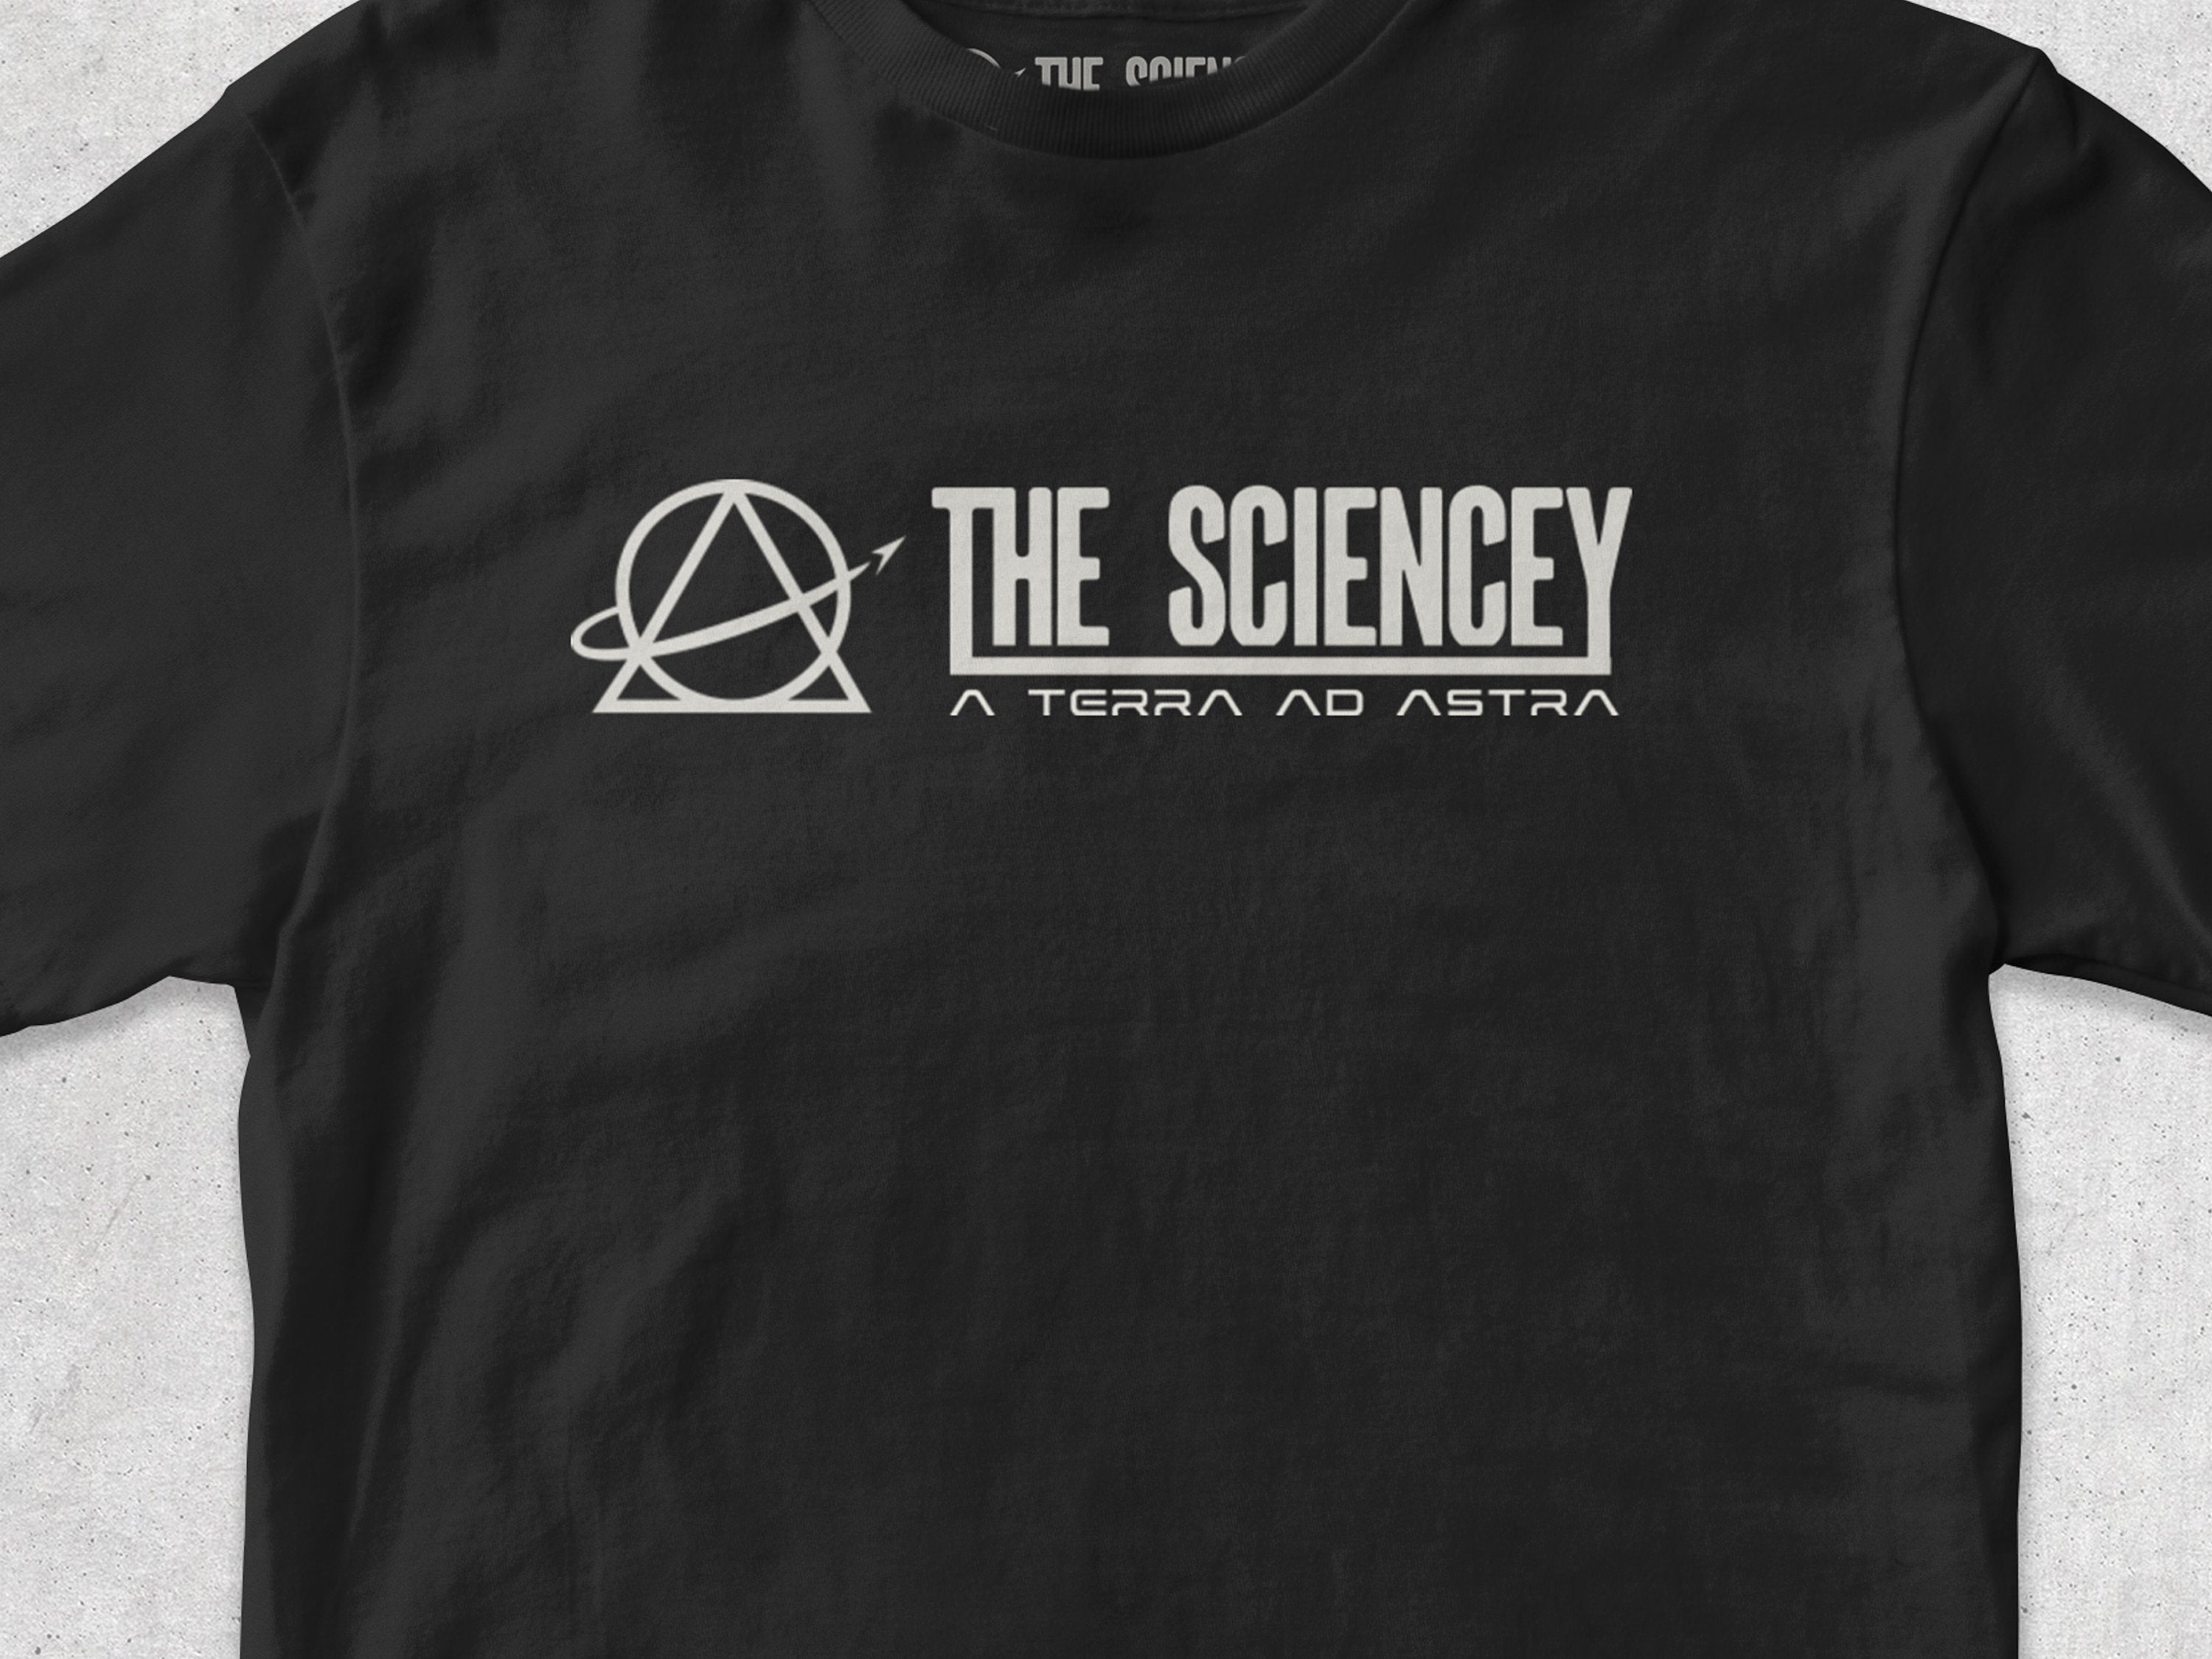 The Sciencey T-Shirt - Minimalist Space Fashion - Ad Astra Futuristic Tee